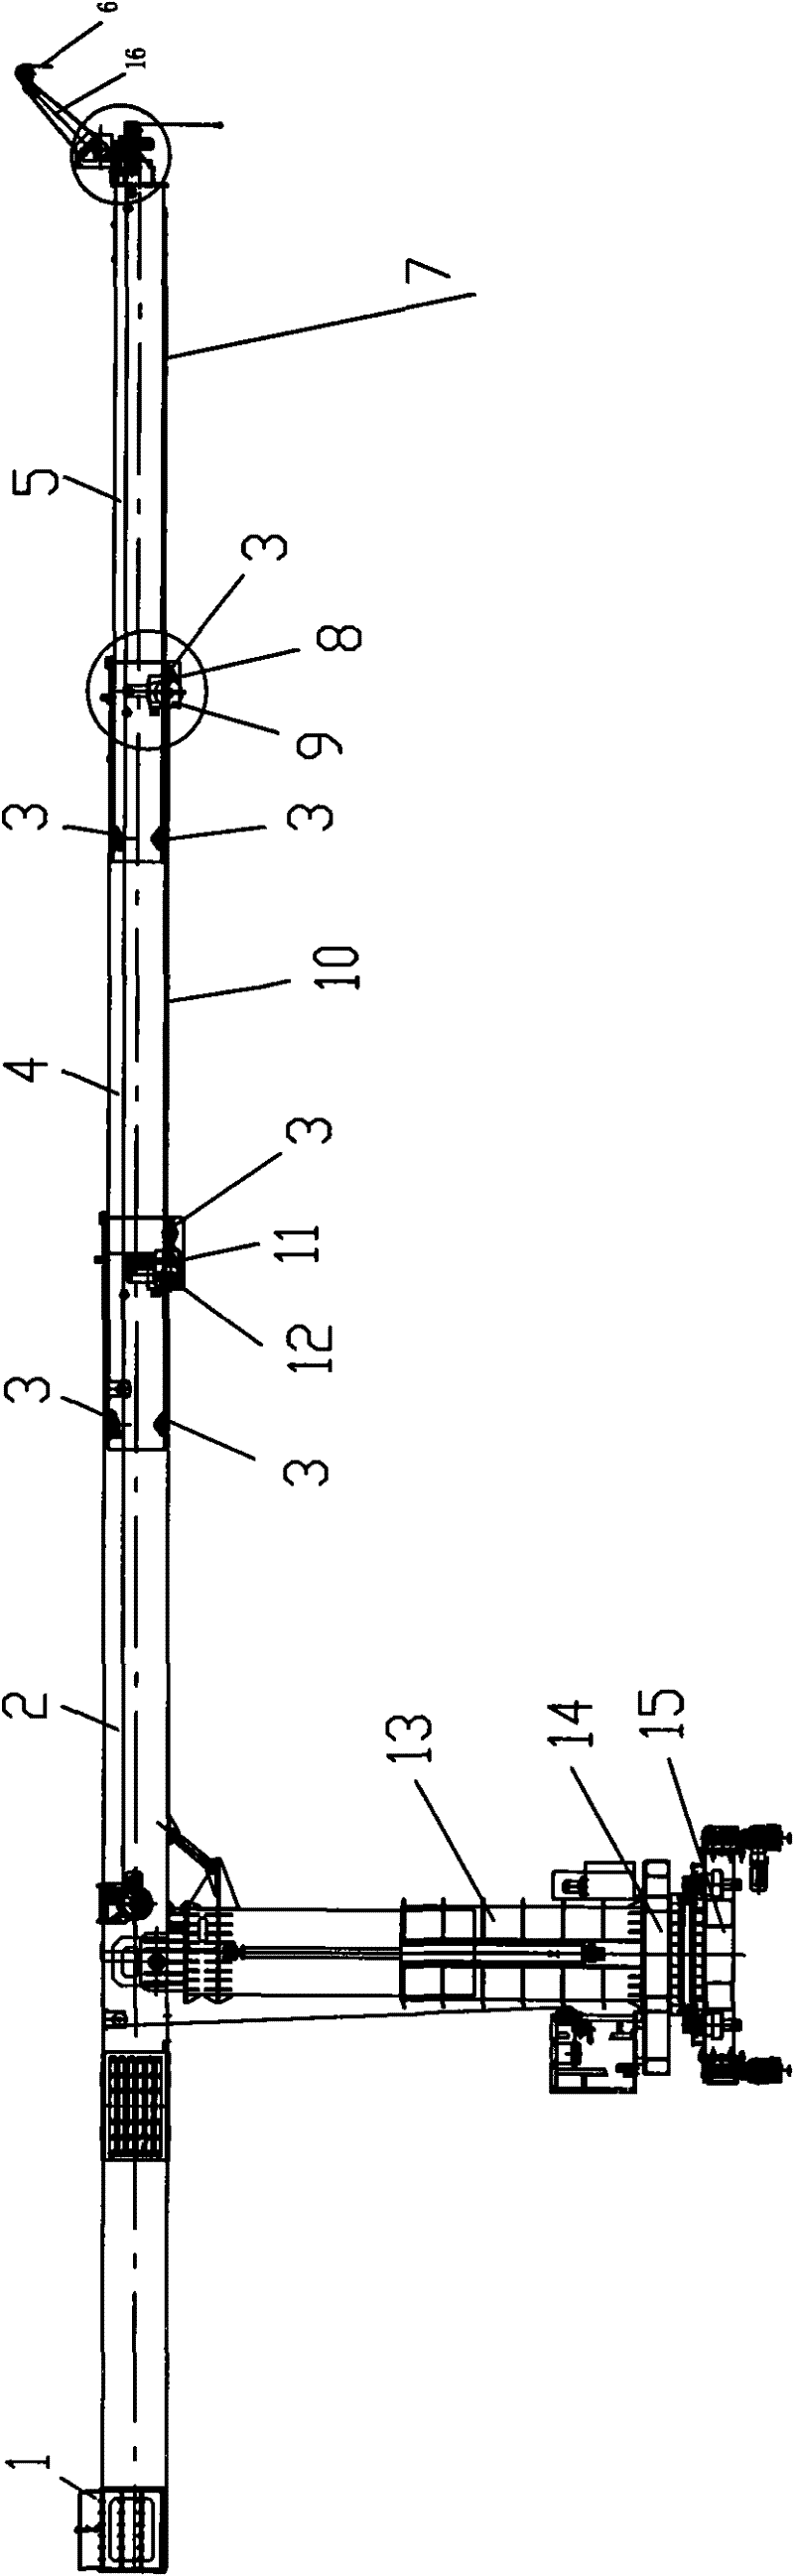 Cross-arm double telescopic mechanism of window cleaning machine